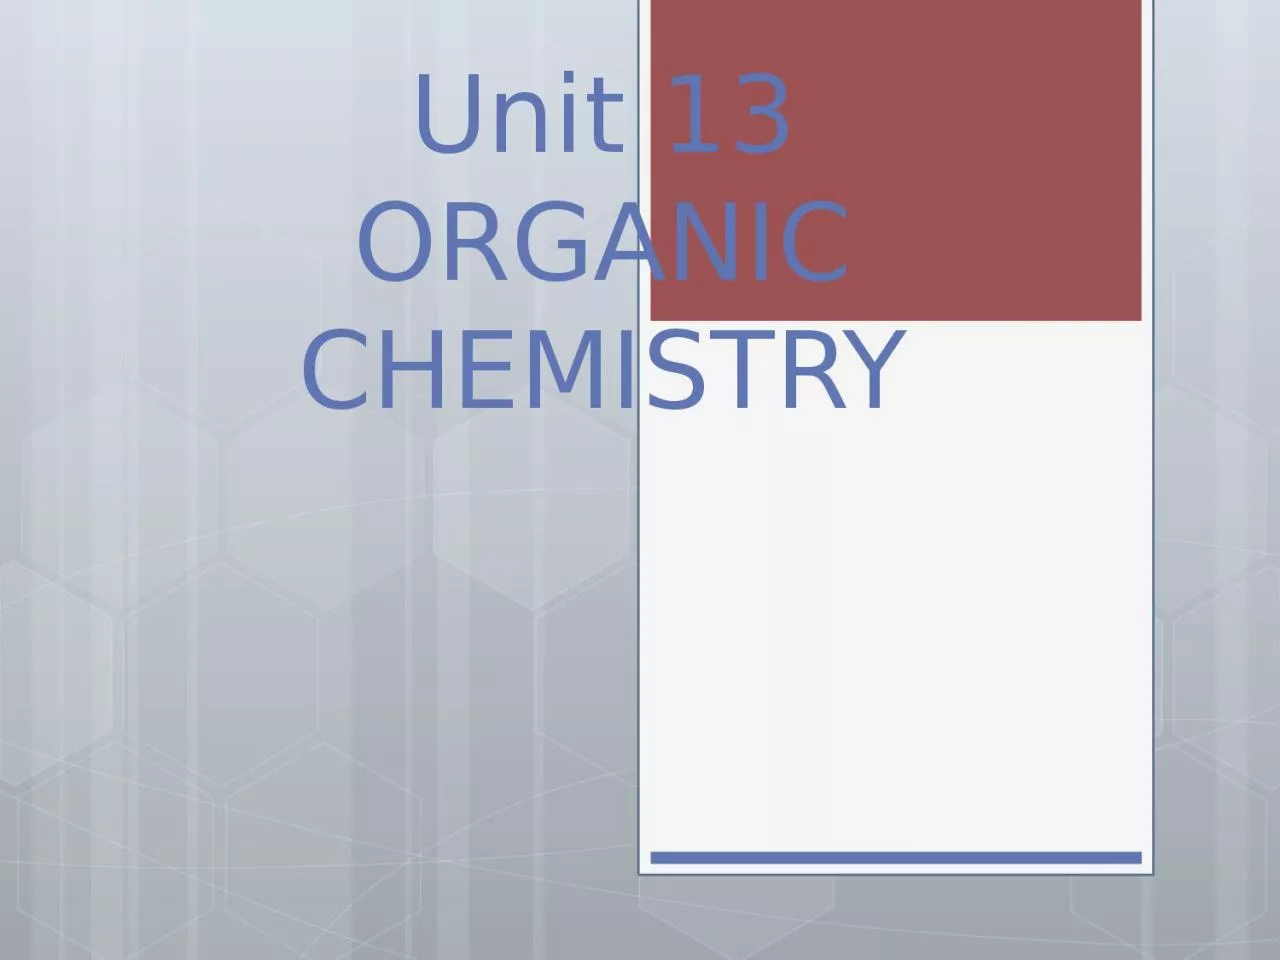 Unit 13 ORGANIC CHEMISTRY